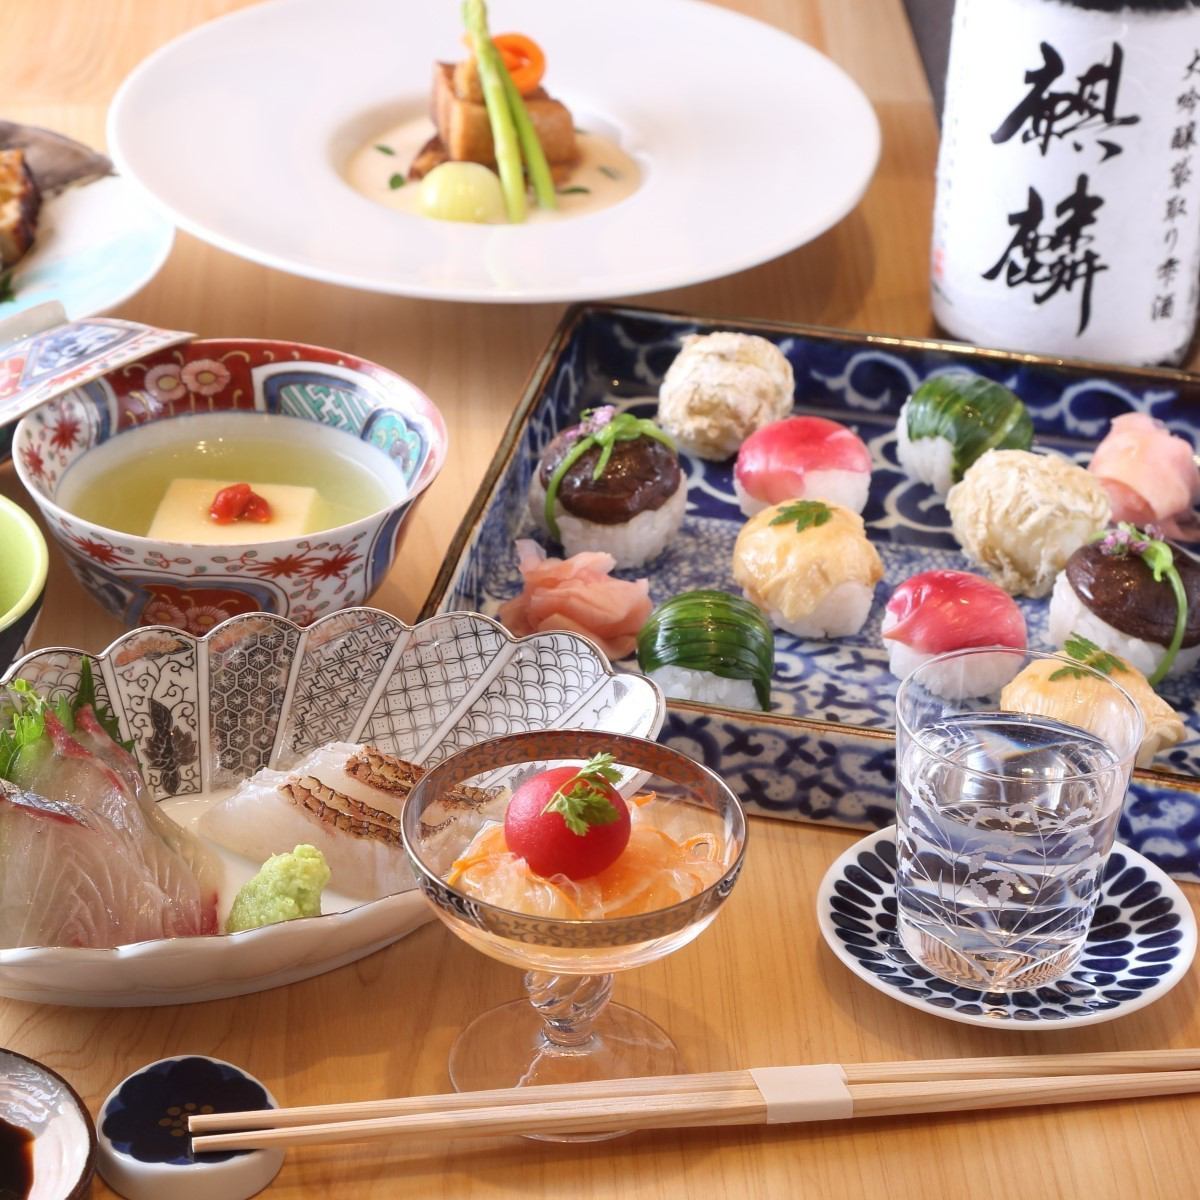 Hozenji momo's second store! Enjoy our carefully selected creative Japanese cuisine.